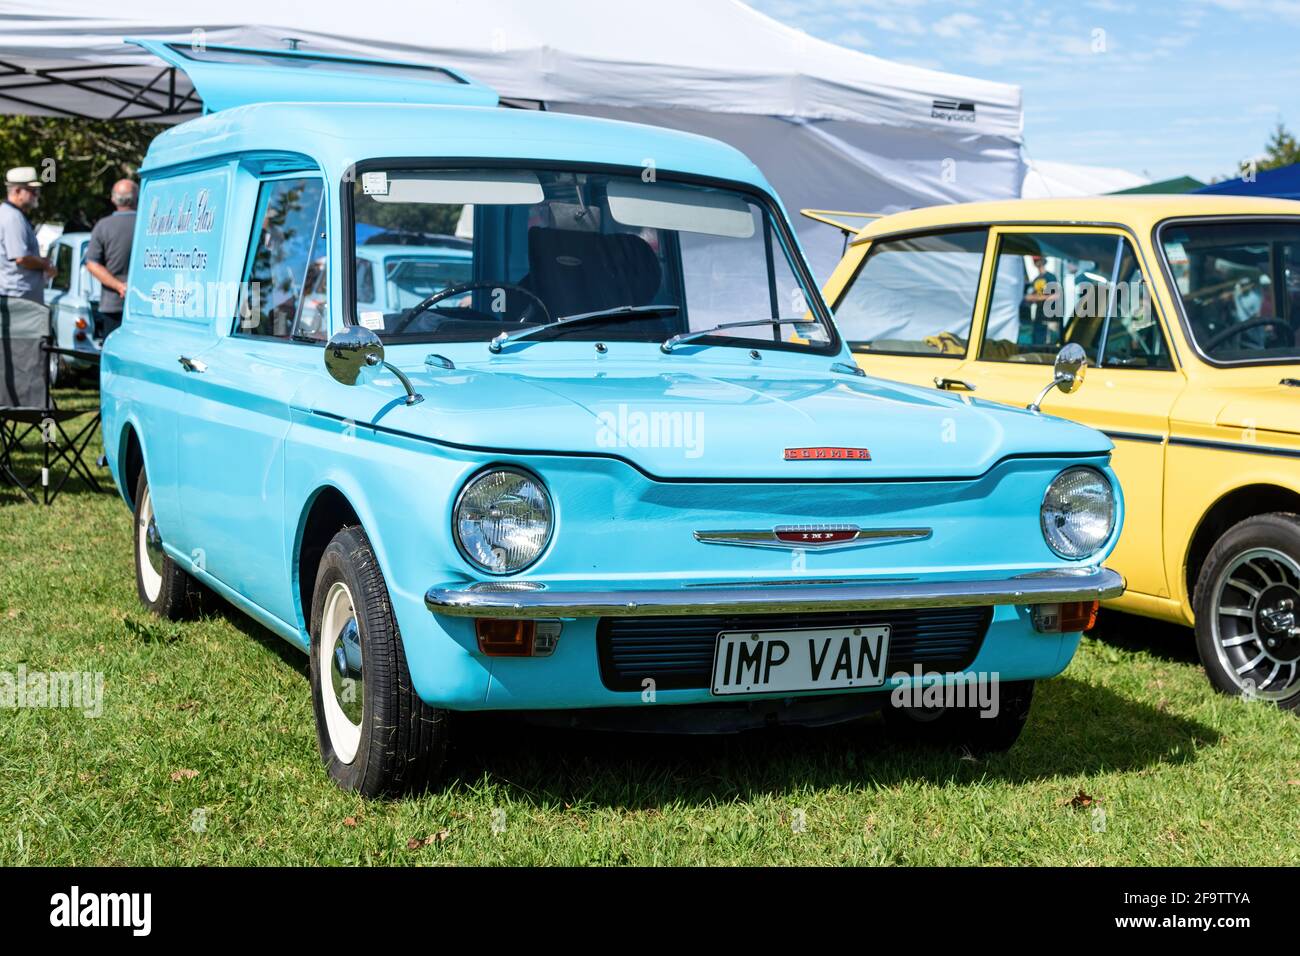 AUCKLAN, NEW ZEALAND - Apr 17, 2021: View of blue Commer Imp Van classic car Stock Photo